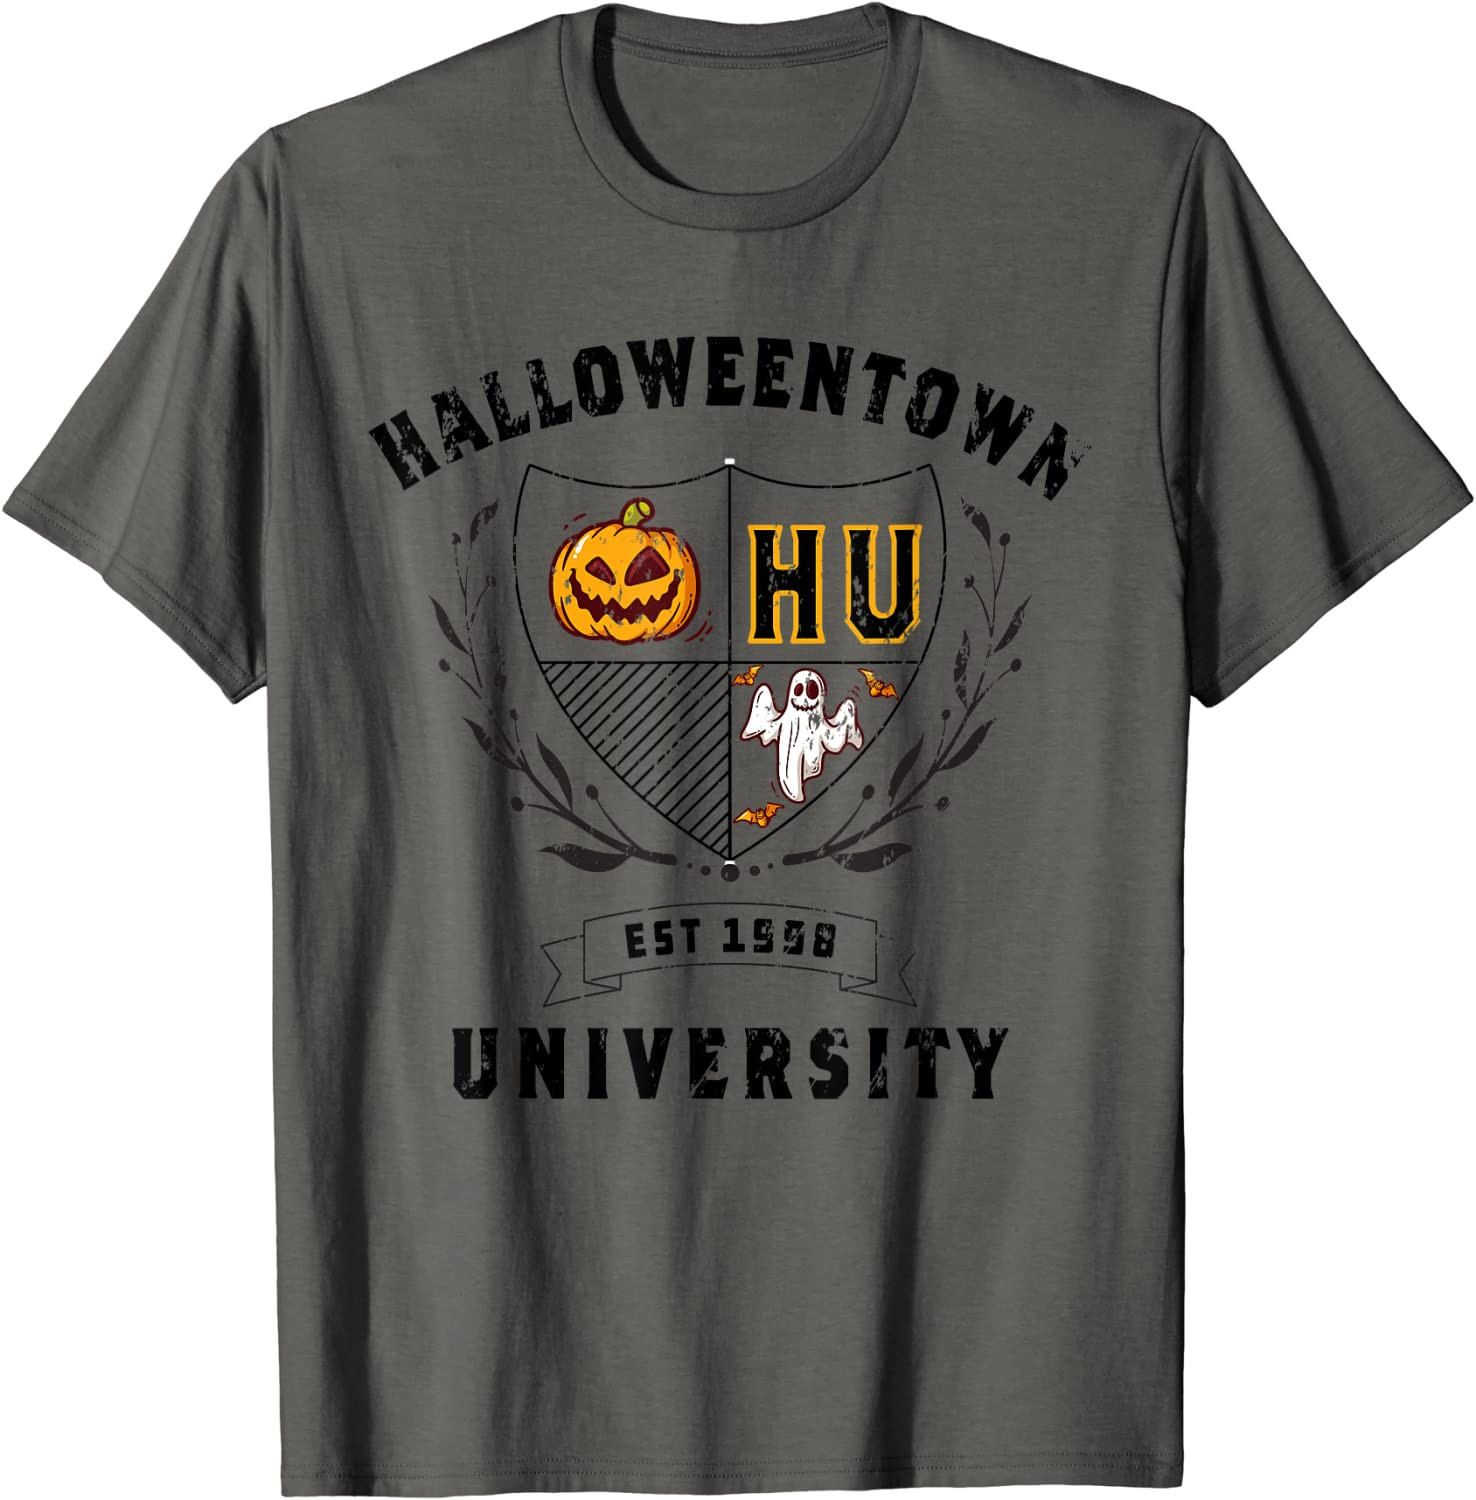 Halloweentown University Witch T-Shirt